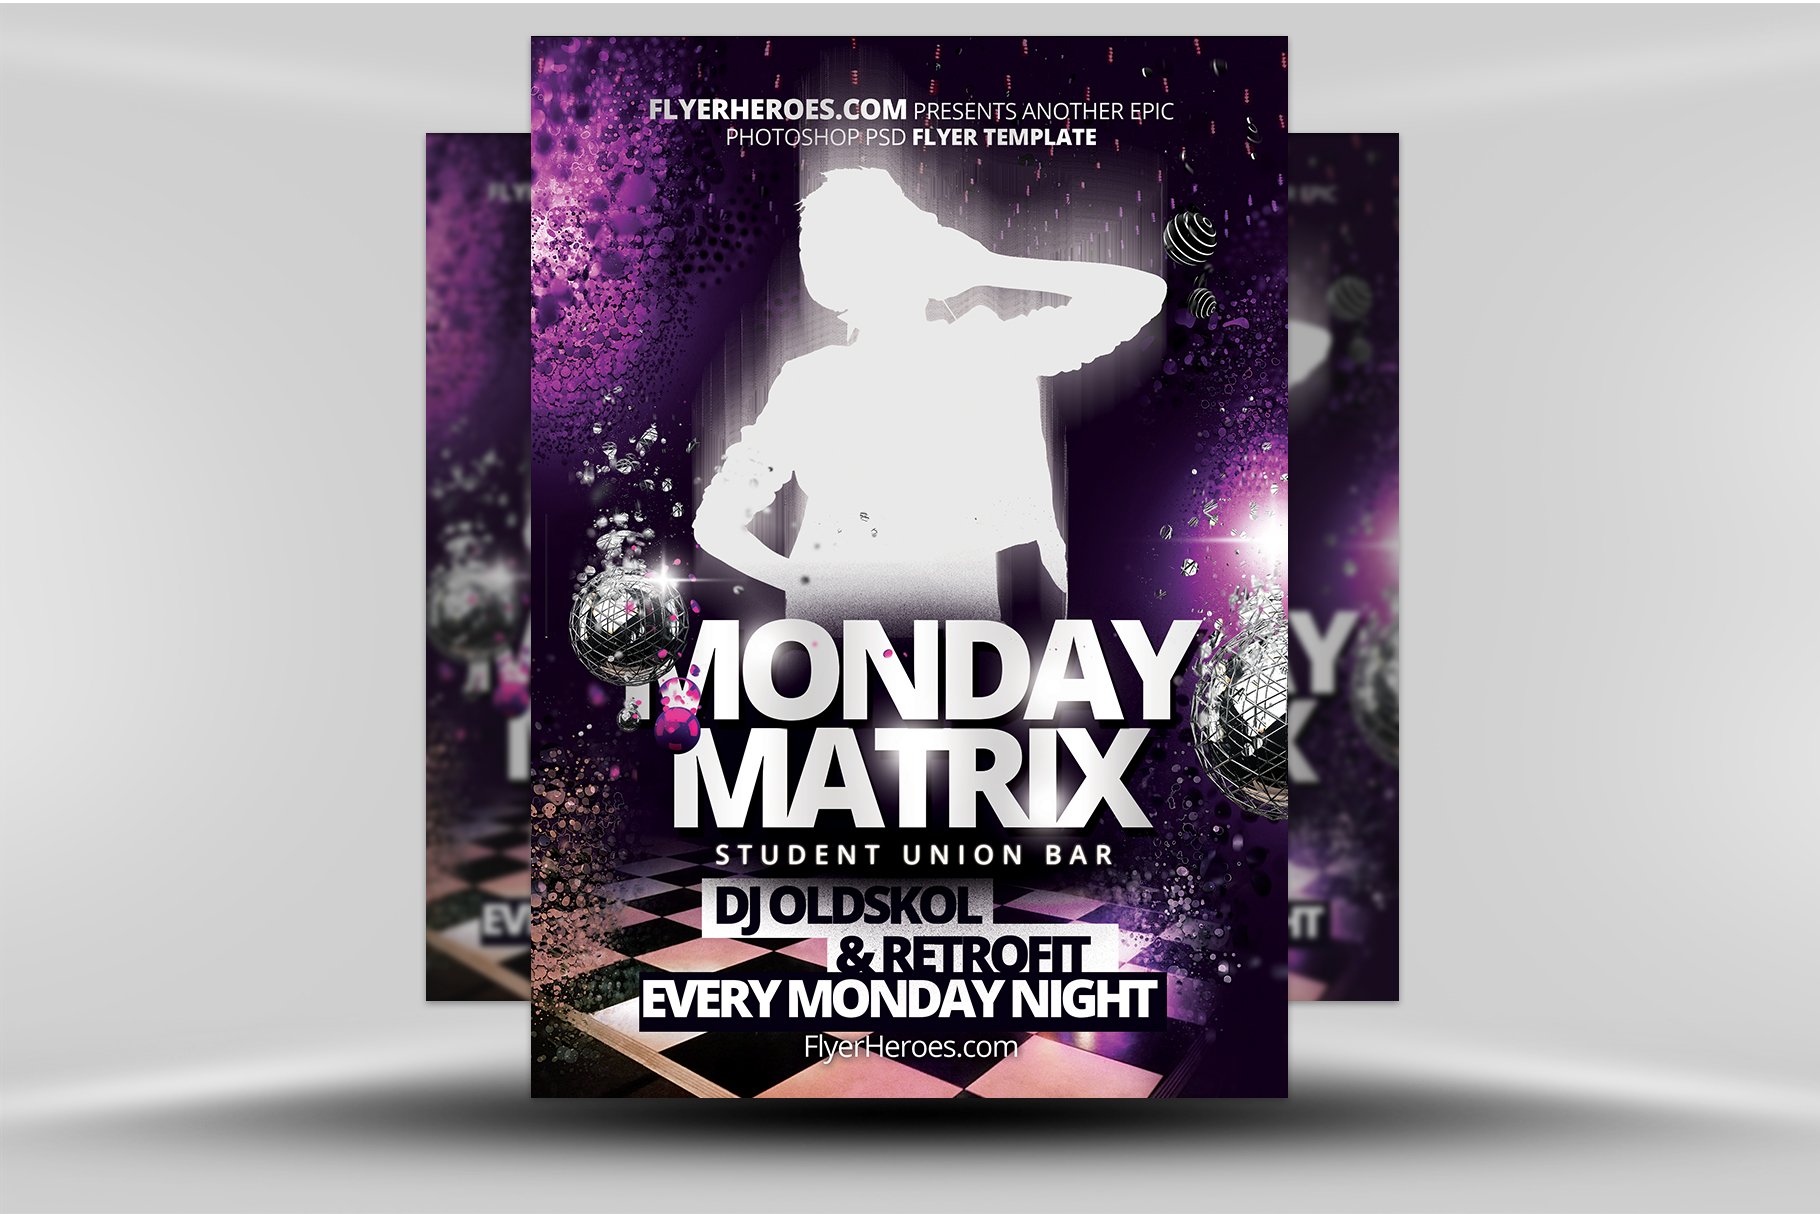 Monday Matrix Flyer Template cover image.